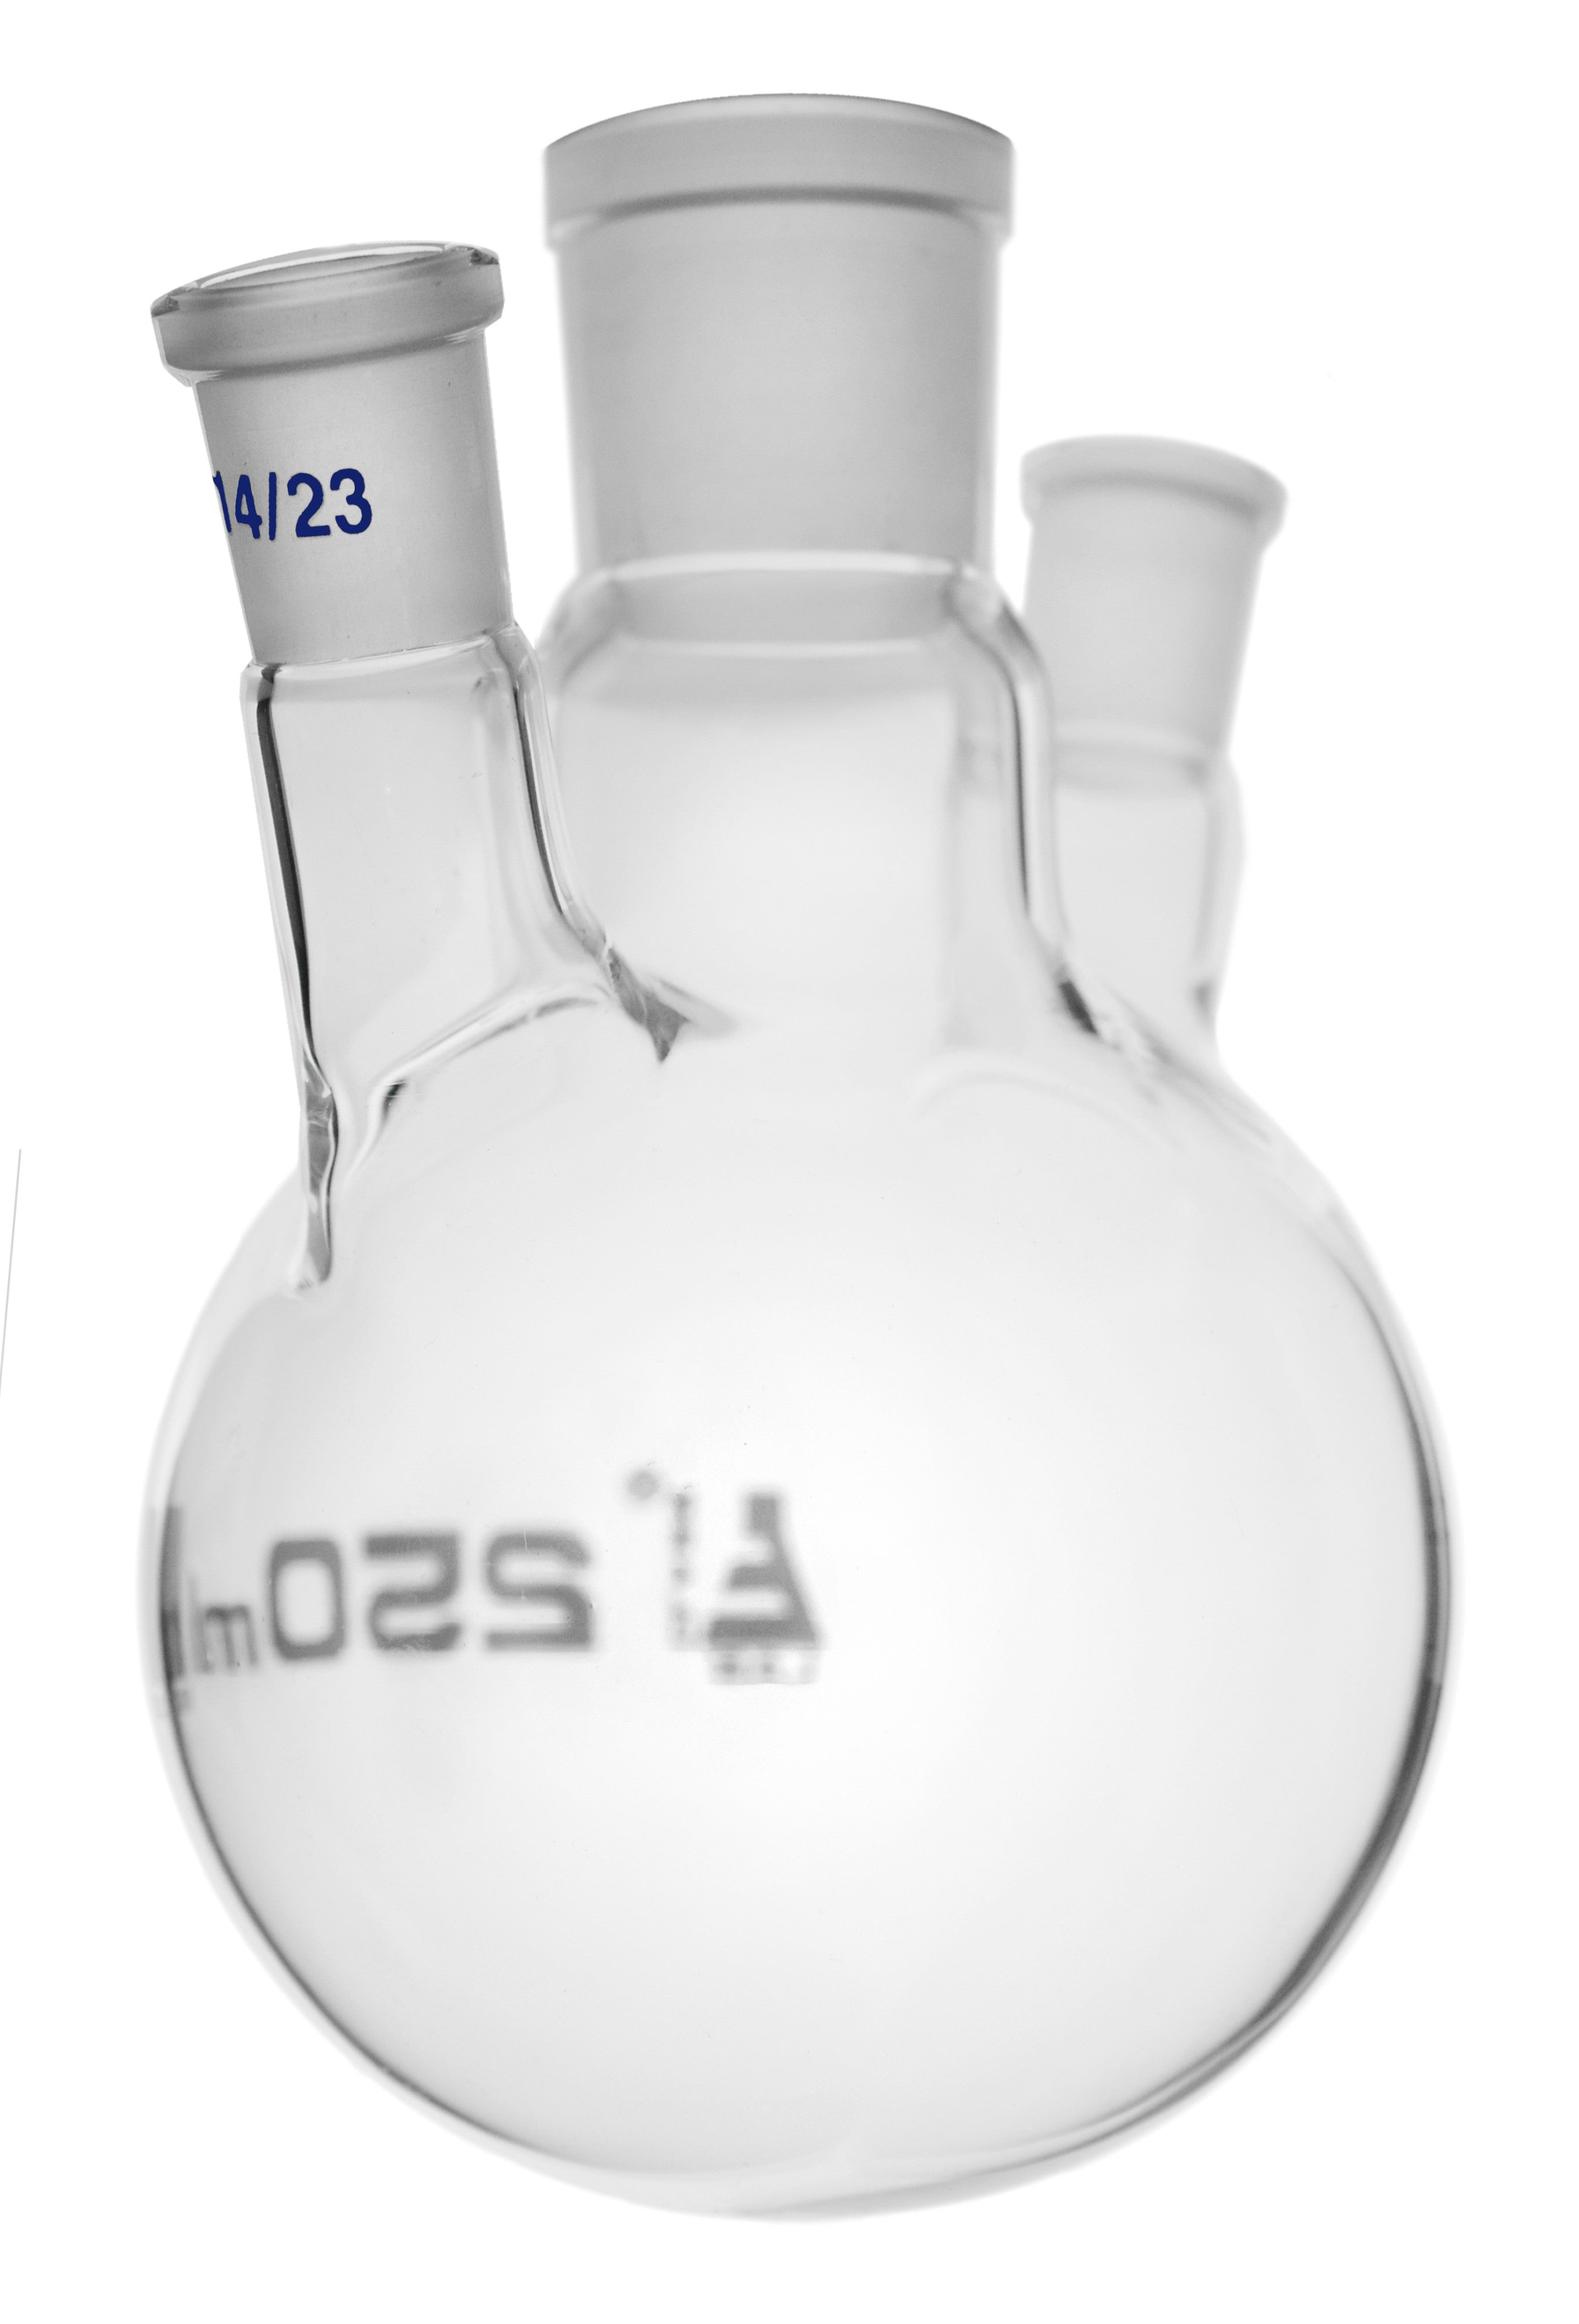 Borosilicate Glass 3 Neck Distillation Flask, 250ml, 24/29 Oblique Neck, 14/23 Side Joint, Autoclavable